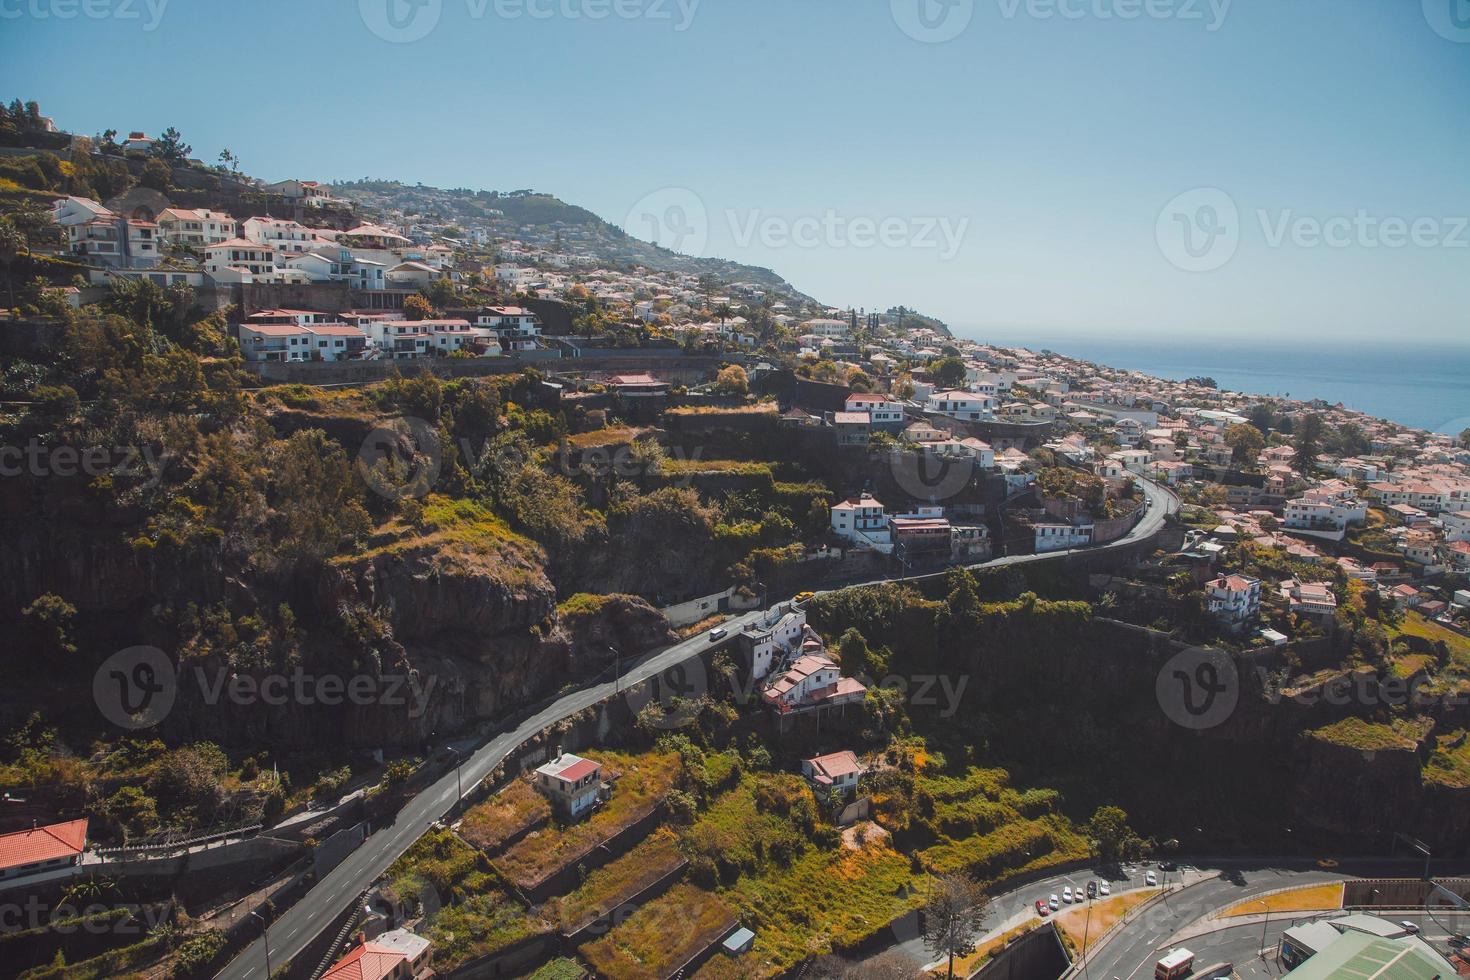 keer bekeken van in de omgeving van funcha, Madeira in Portugal foto